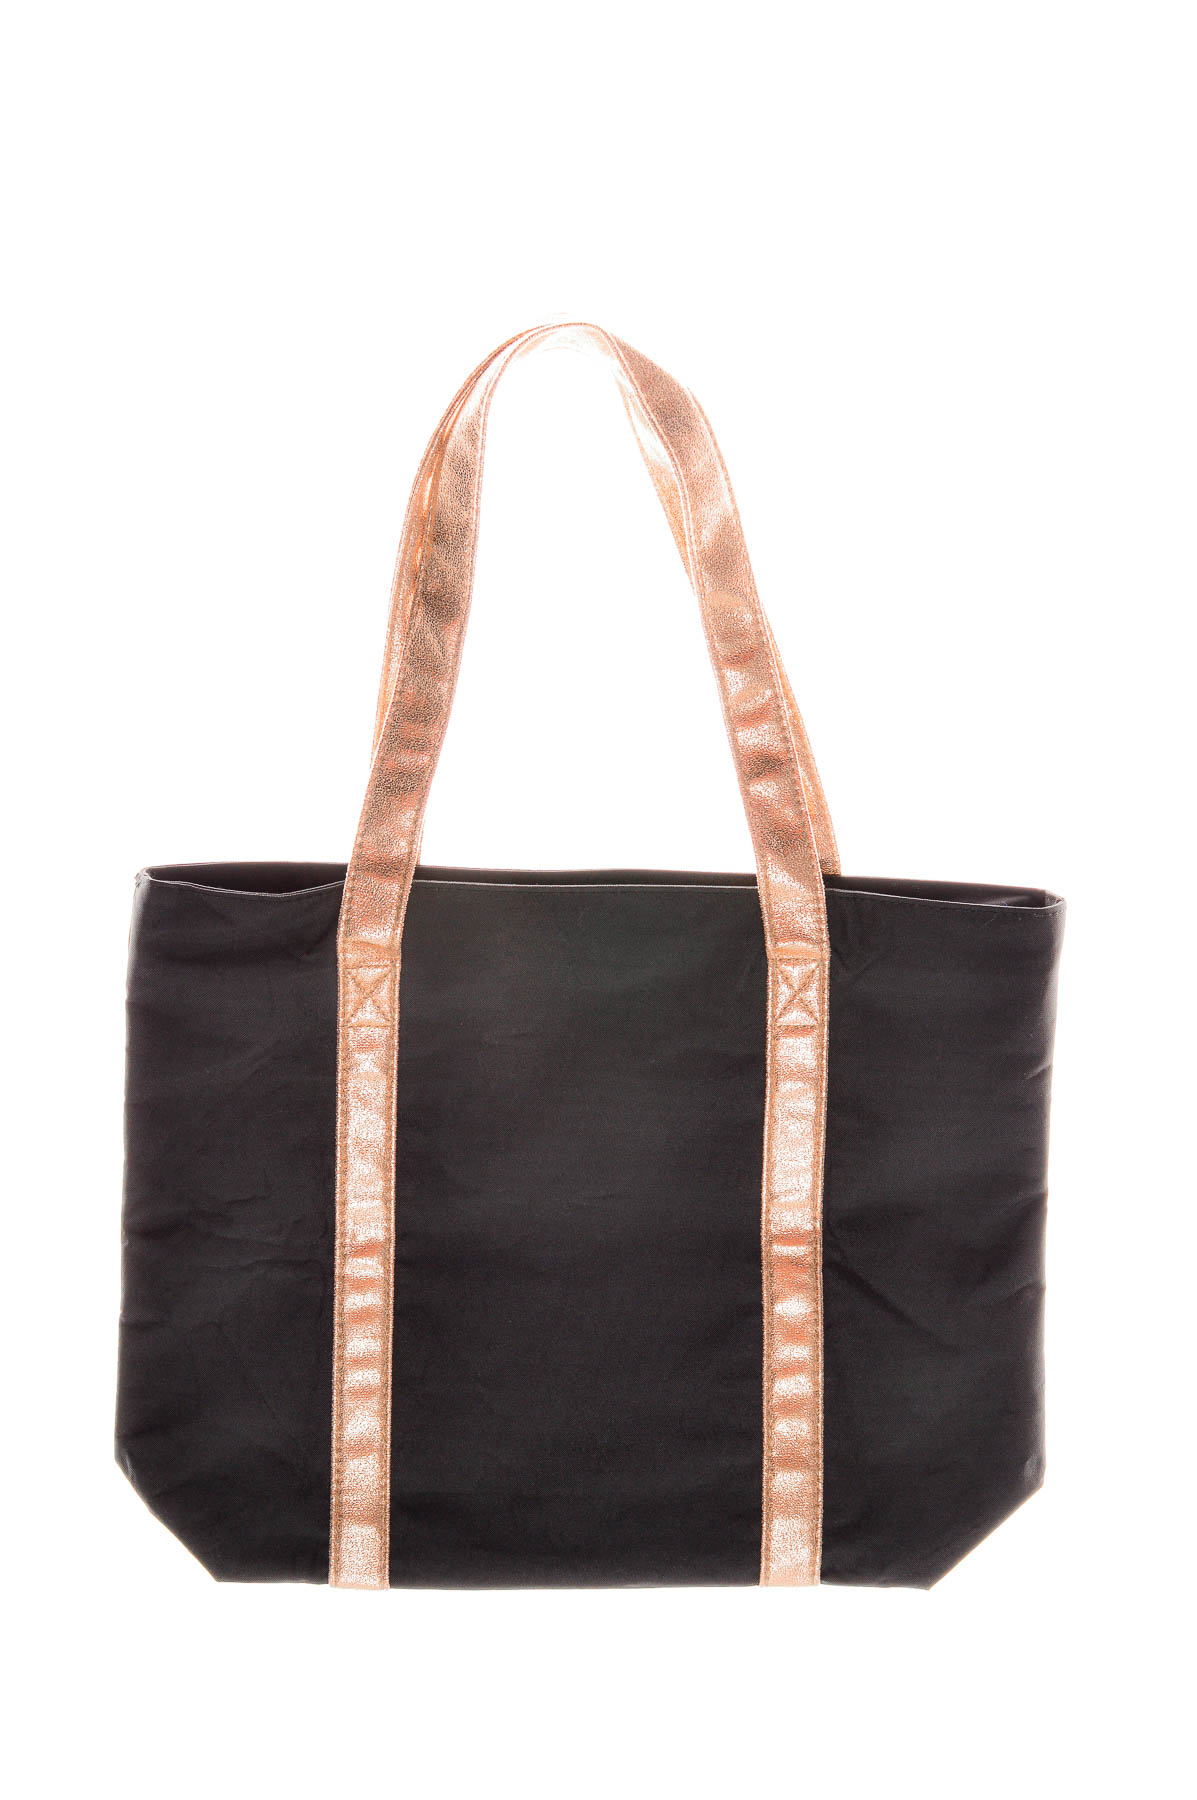 Shopping bag - LBVYR - 0